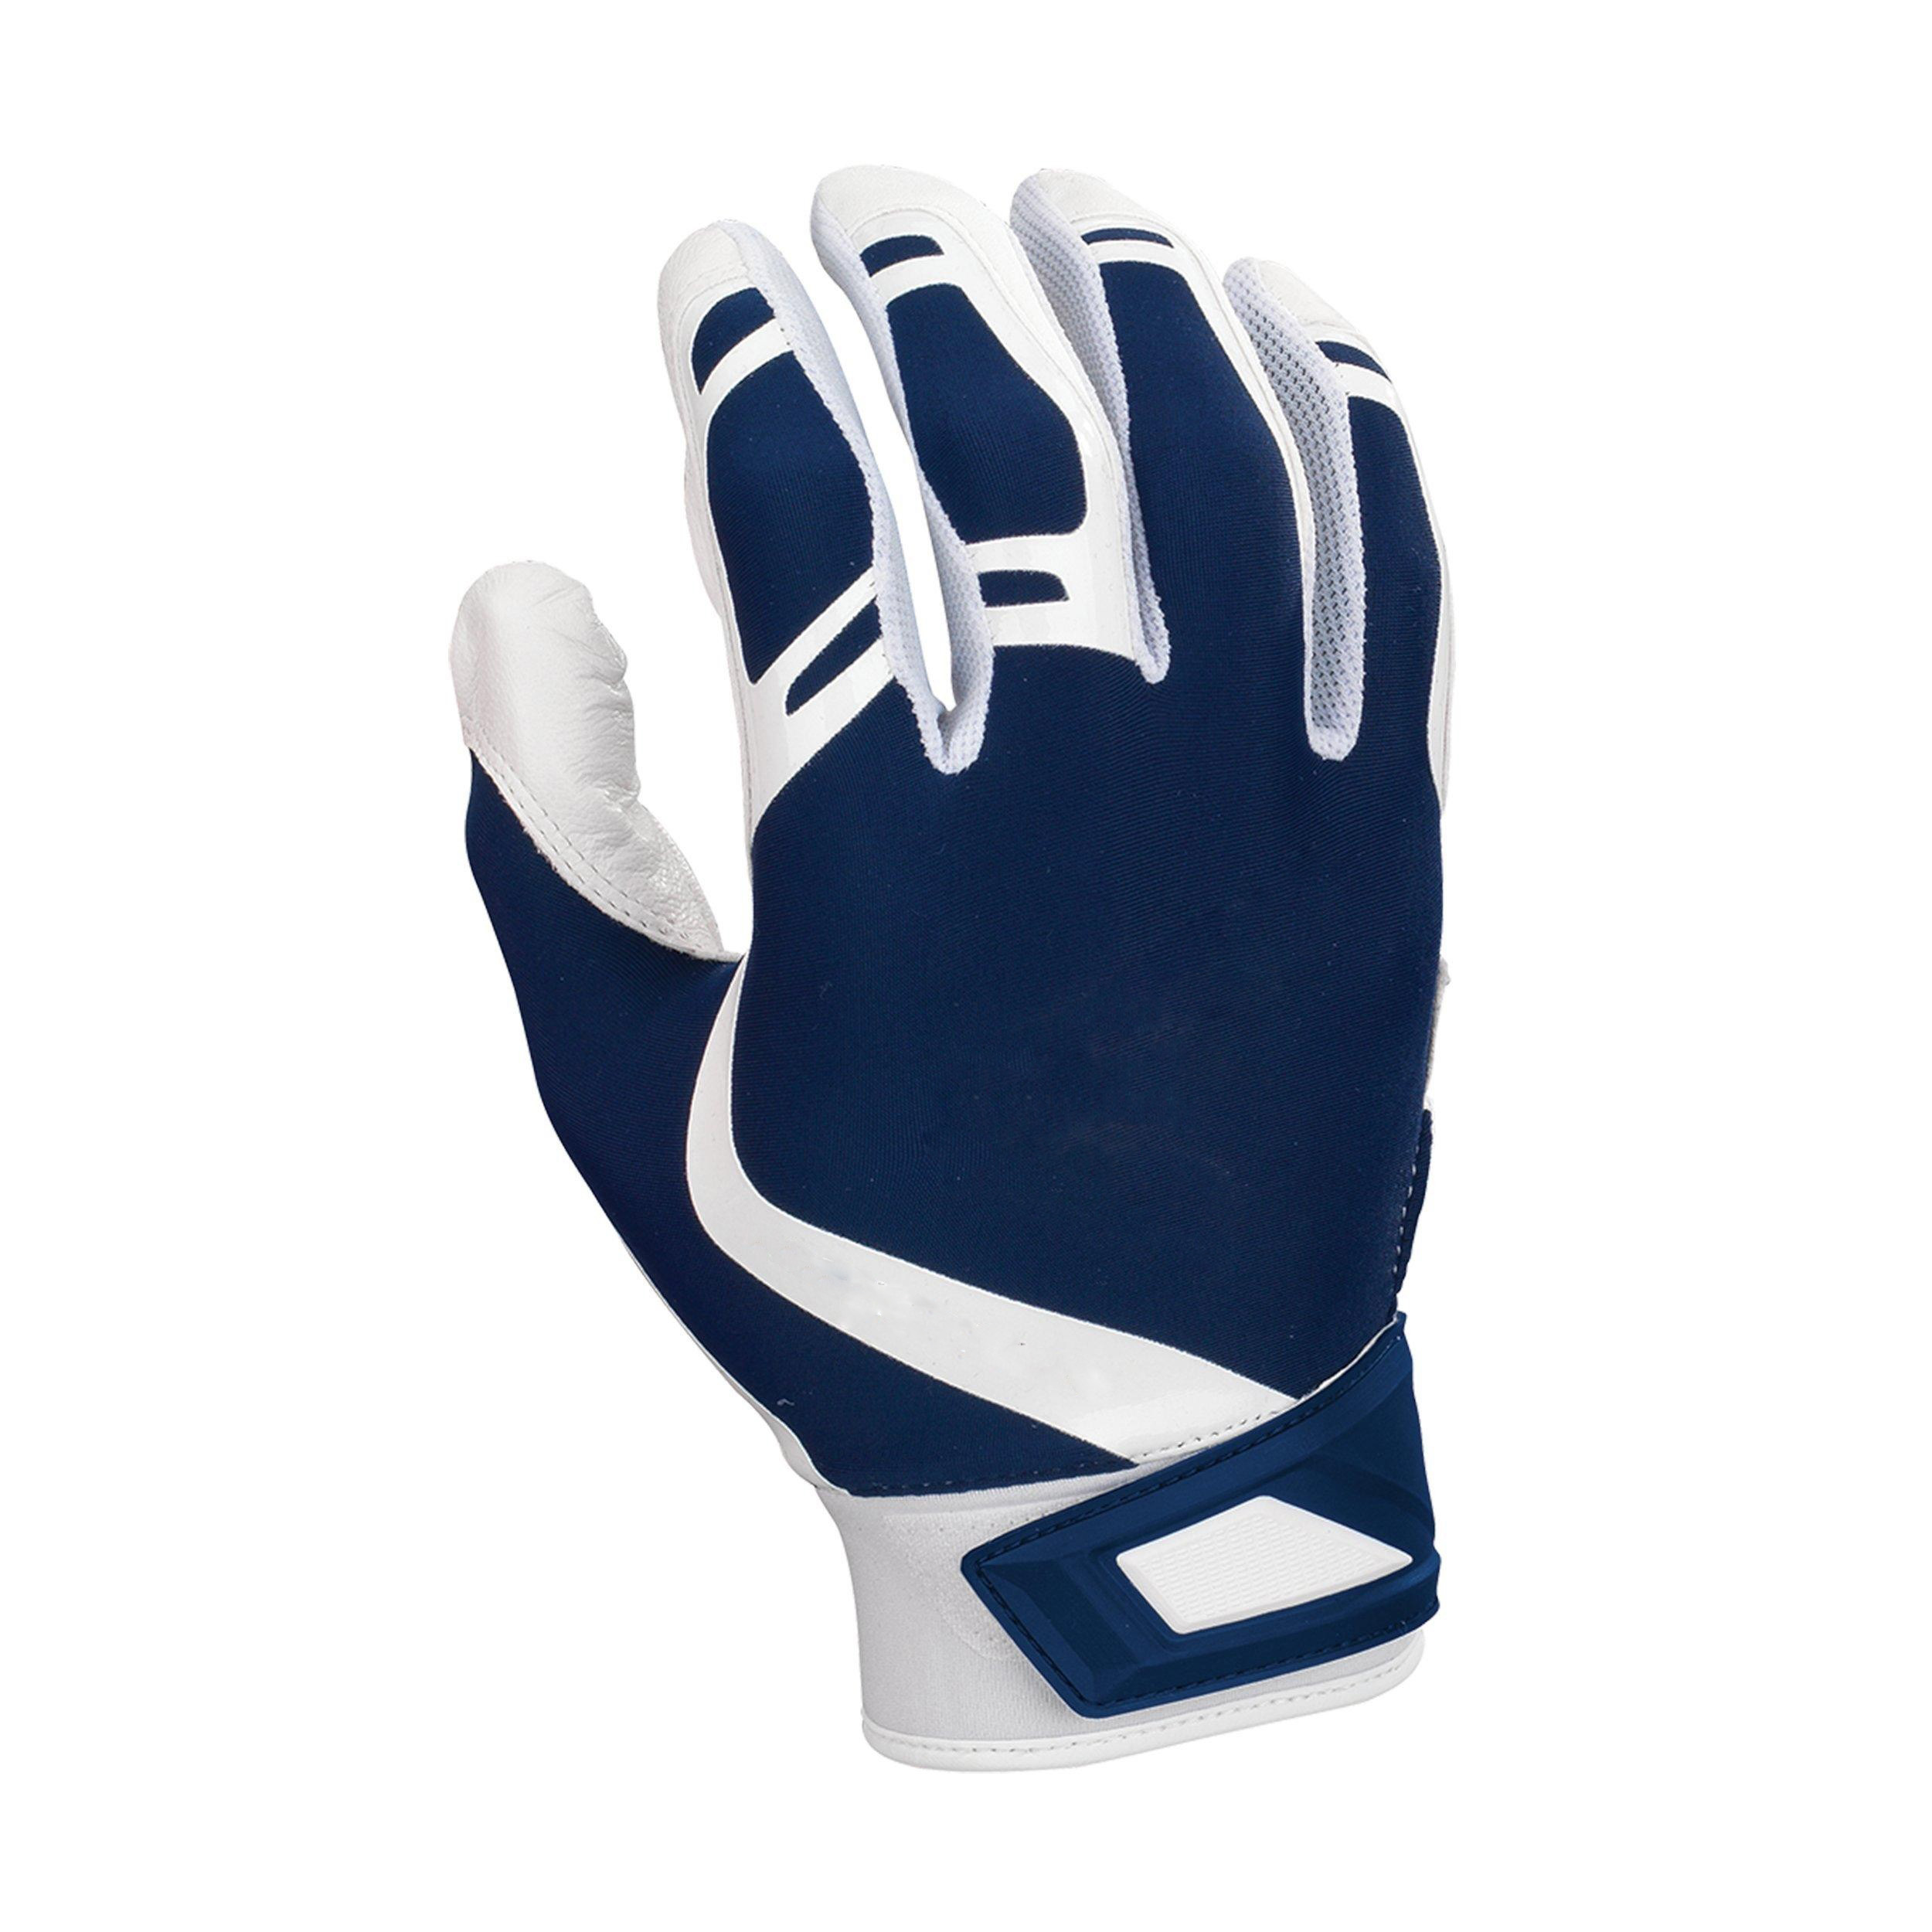 Flexible genuine leather strengthening palm durable batting gloves